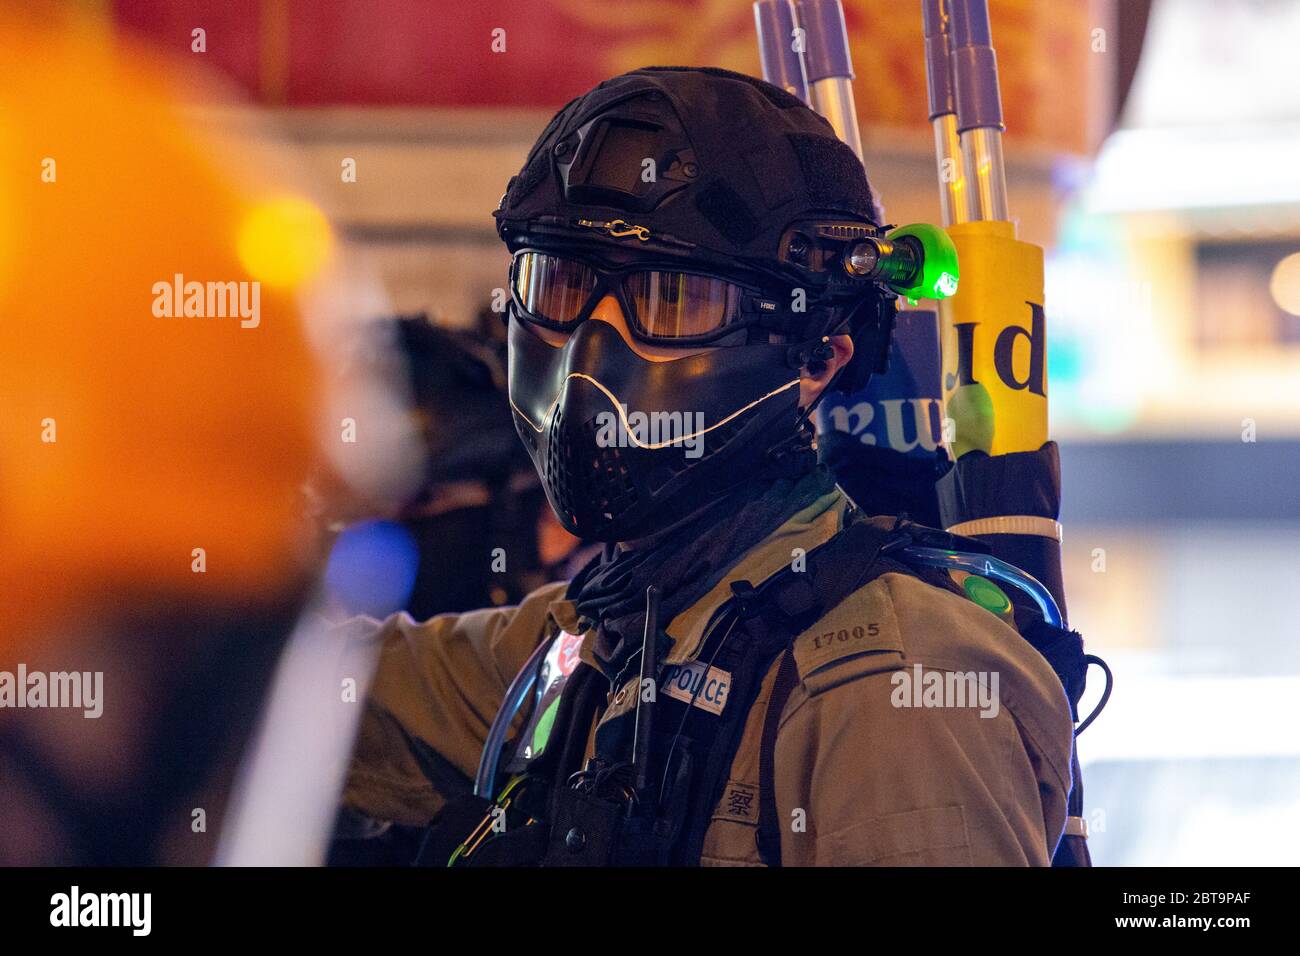 Hong Kong, 24th May 2020. Hk Police officer. Credit: David Ogg / Alamy Live News Stock Photo